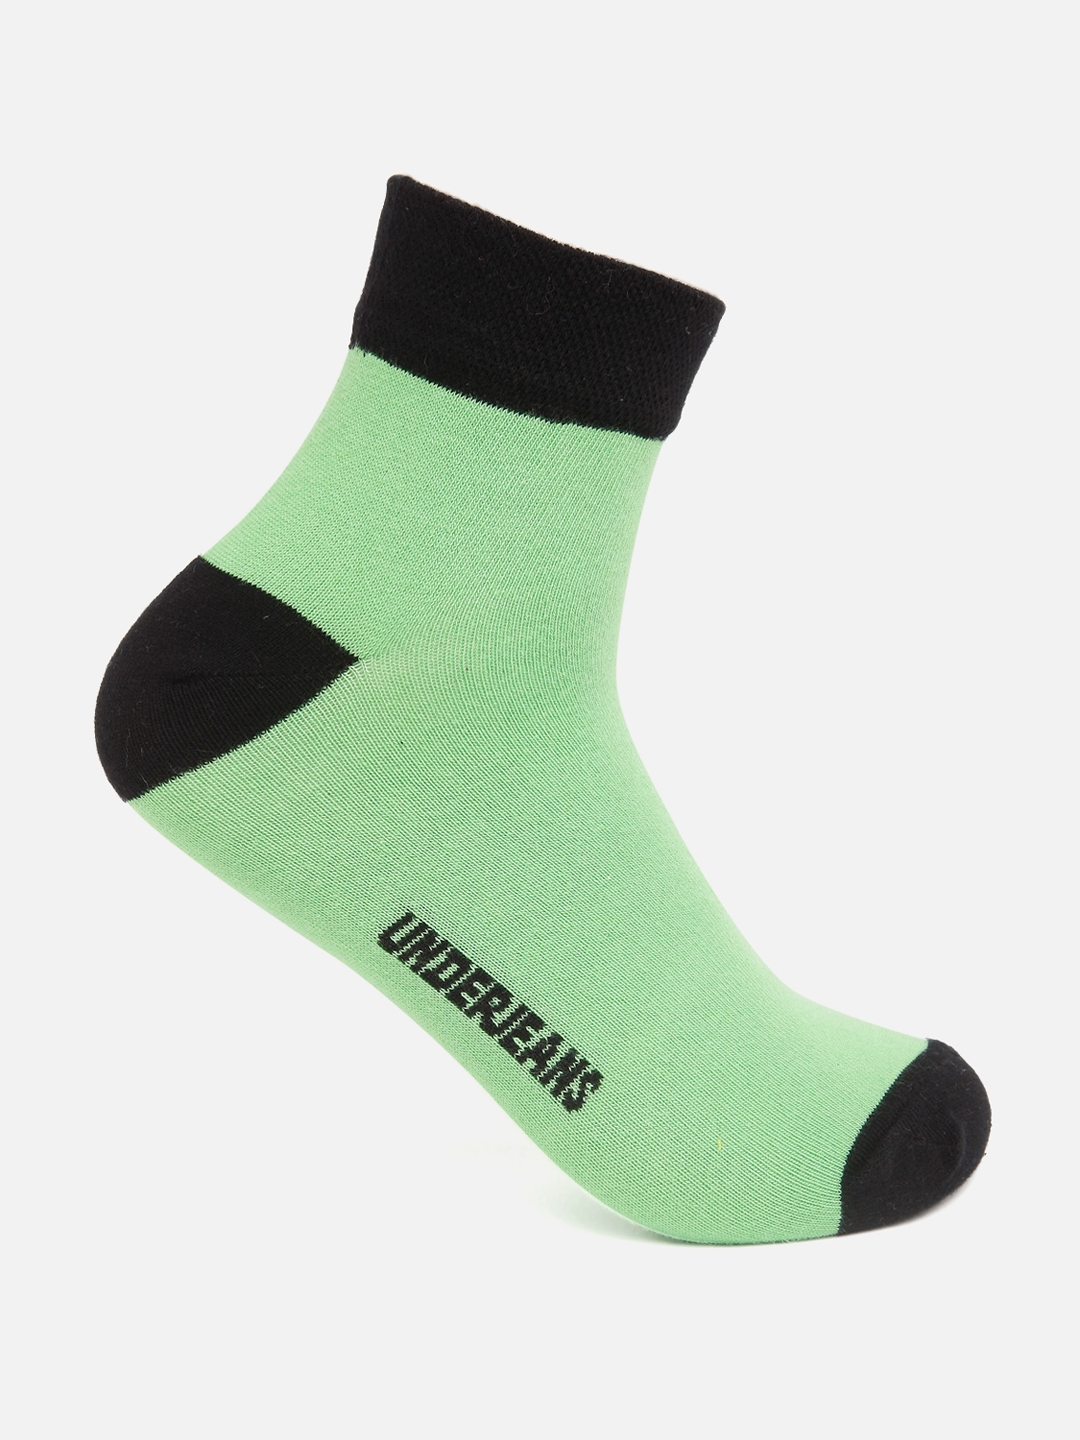 Spykar | Underjeans by Spykar Men Green/Black Ankle Length (Non Terry) Single Pair of Socks